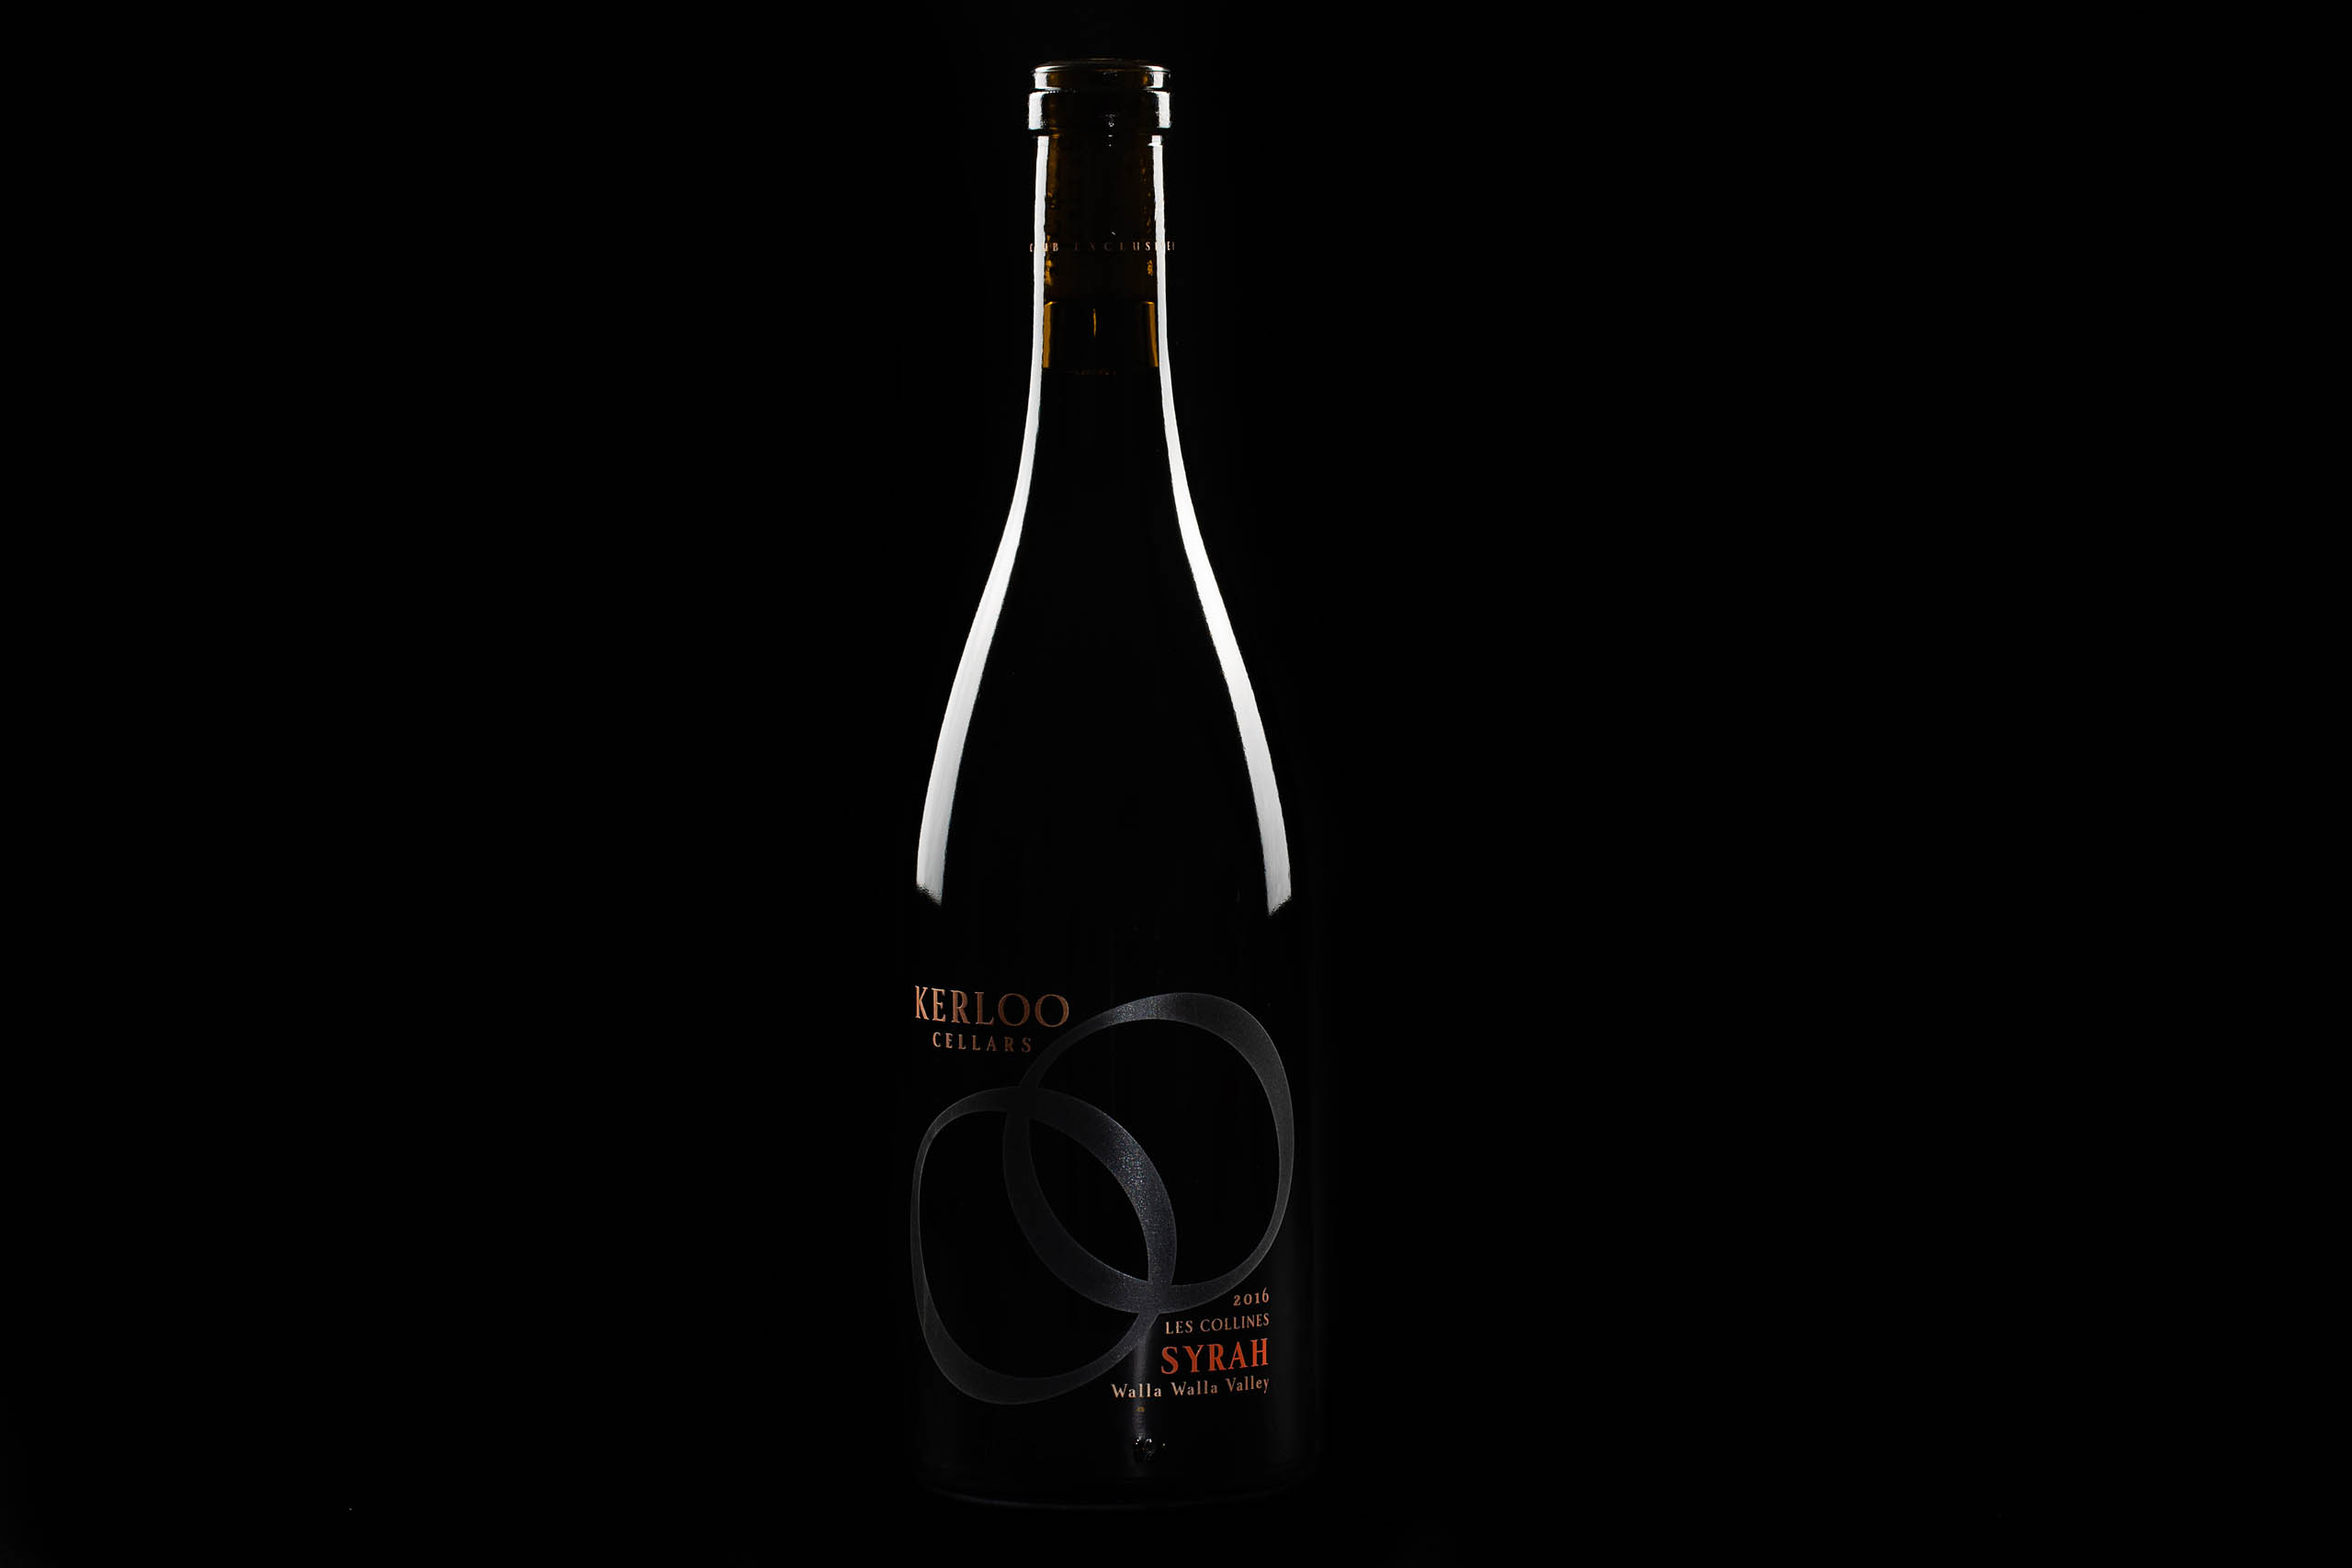 Kerloo Cellars Wine